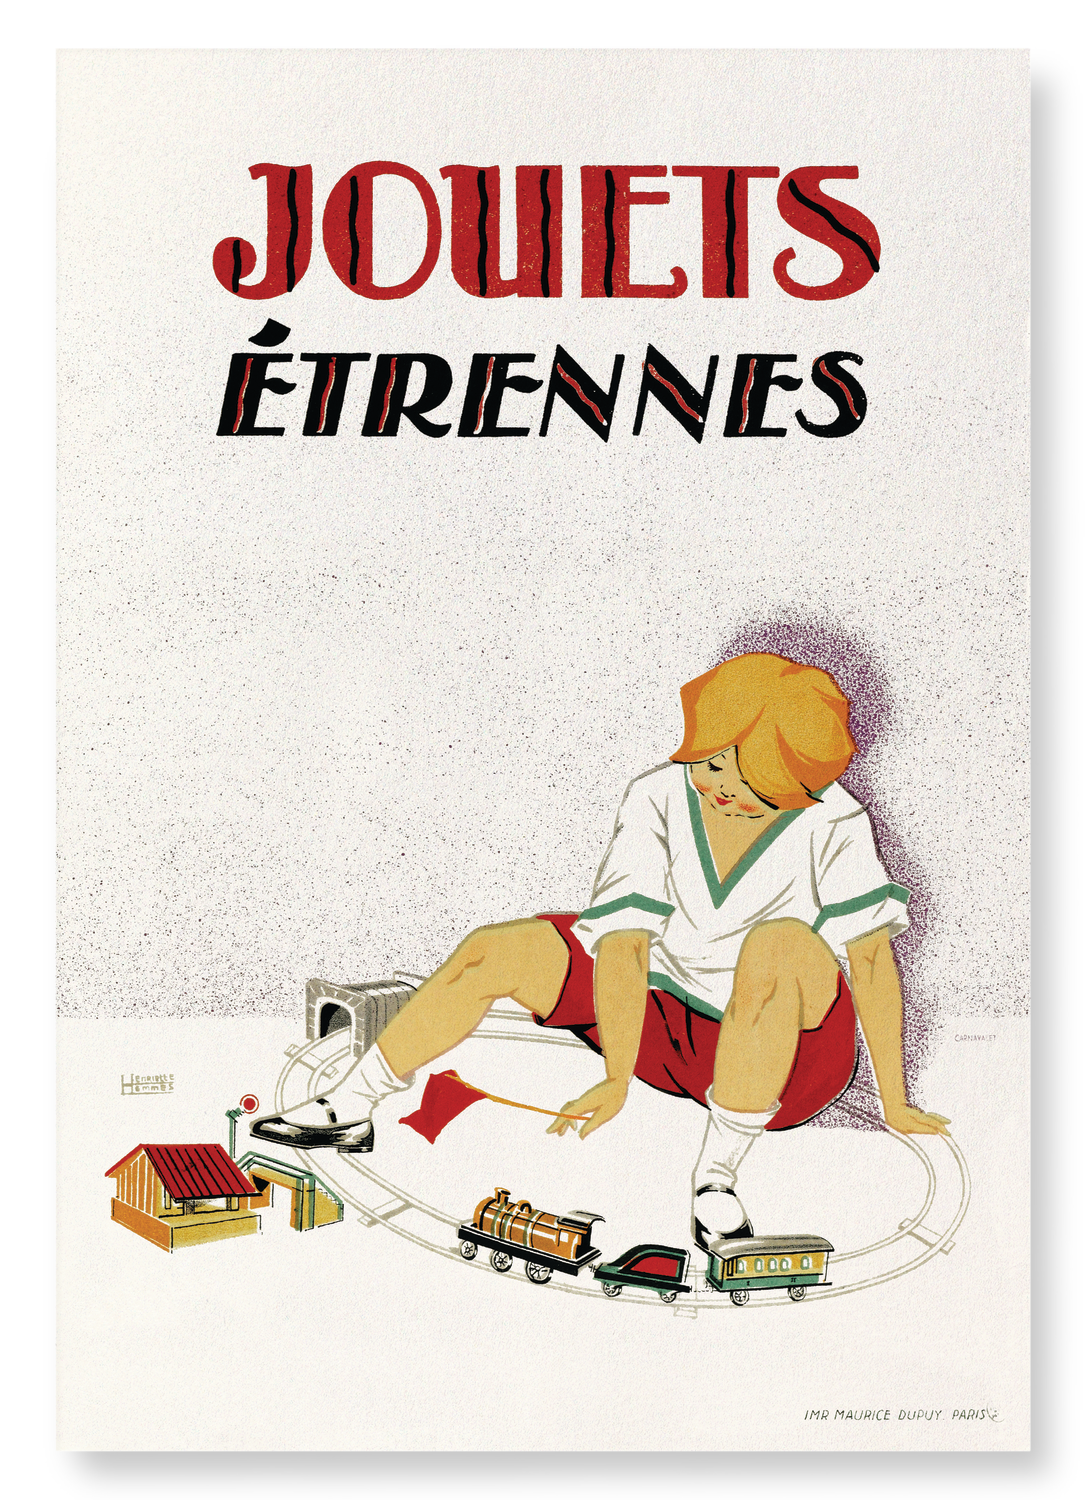 JOUETS ETRENNES (C.1920)